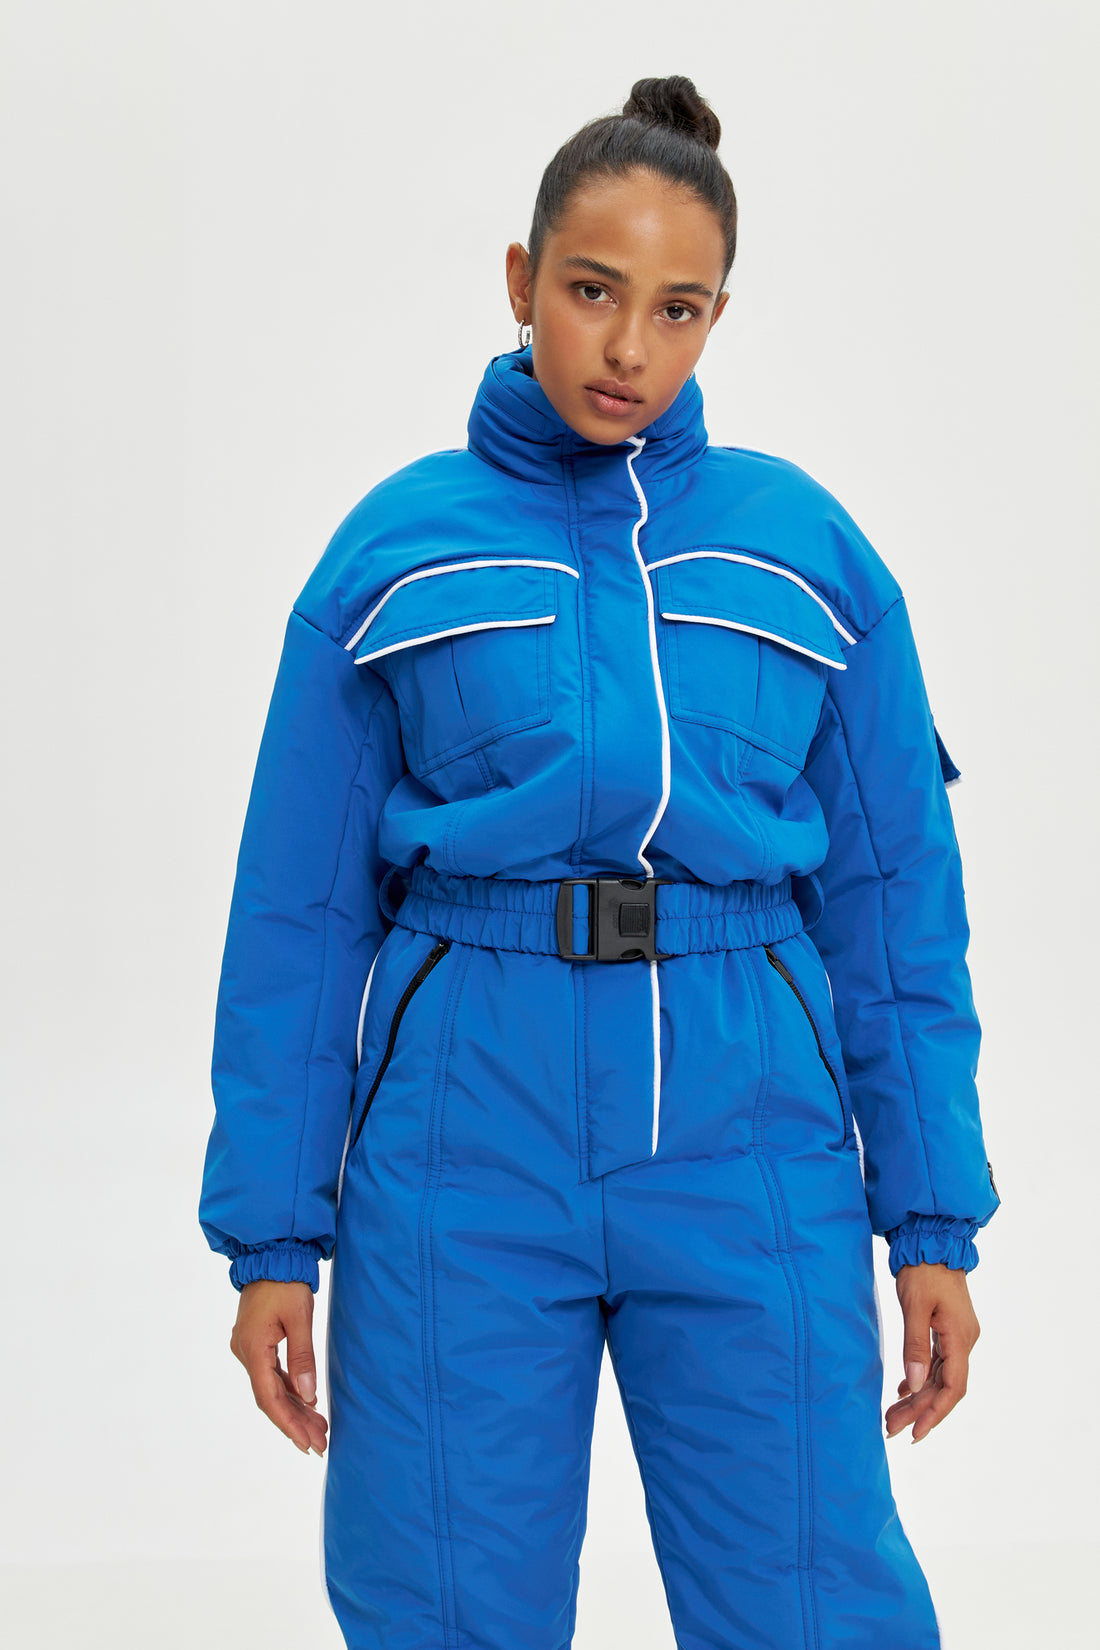 Blue ski suit BLANC - BLUE with white edging - Ski wear women's for stylish ski look